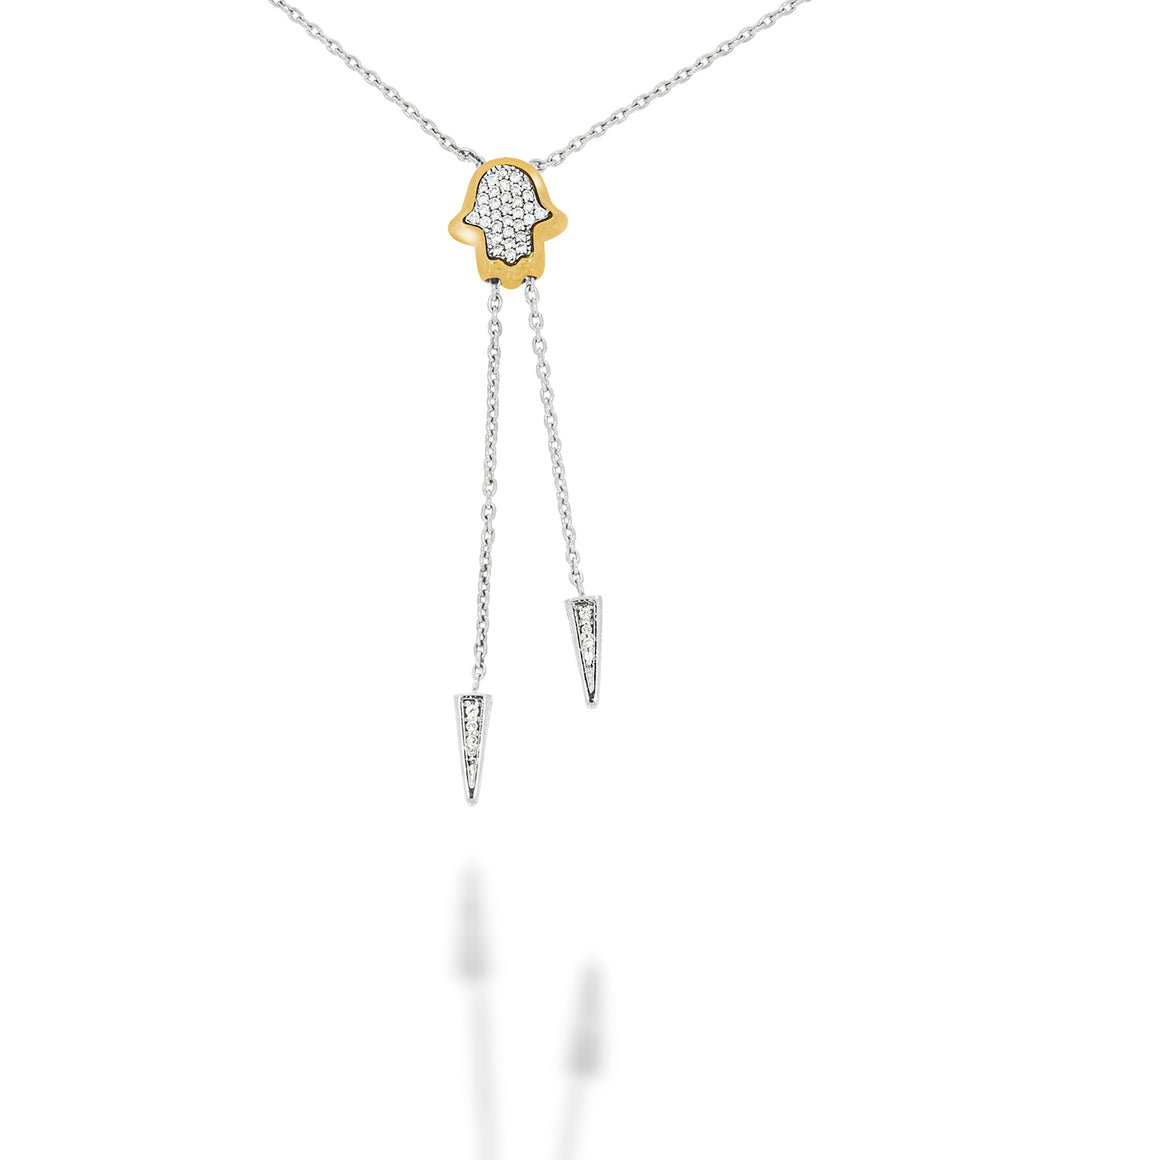 Pave Diamond Hamsa Charm Pendant tow tone 18K yellow gold and 18K white gold, Diamond Hamsa Necklace